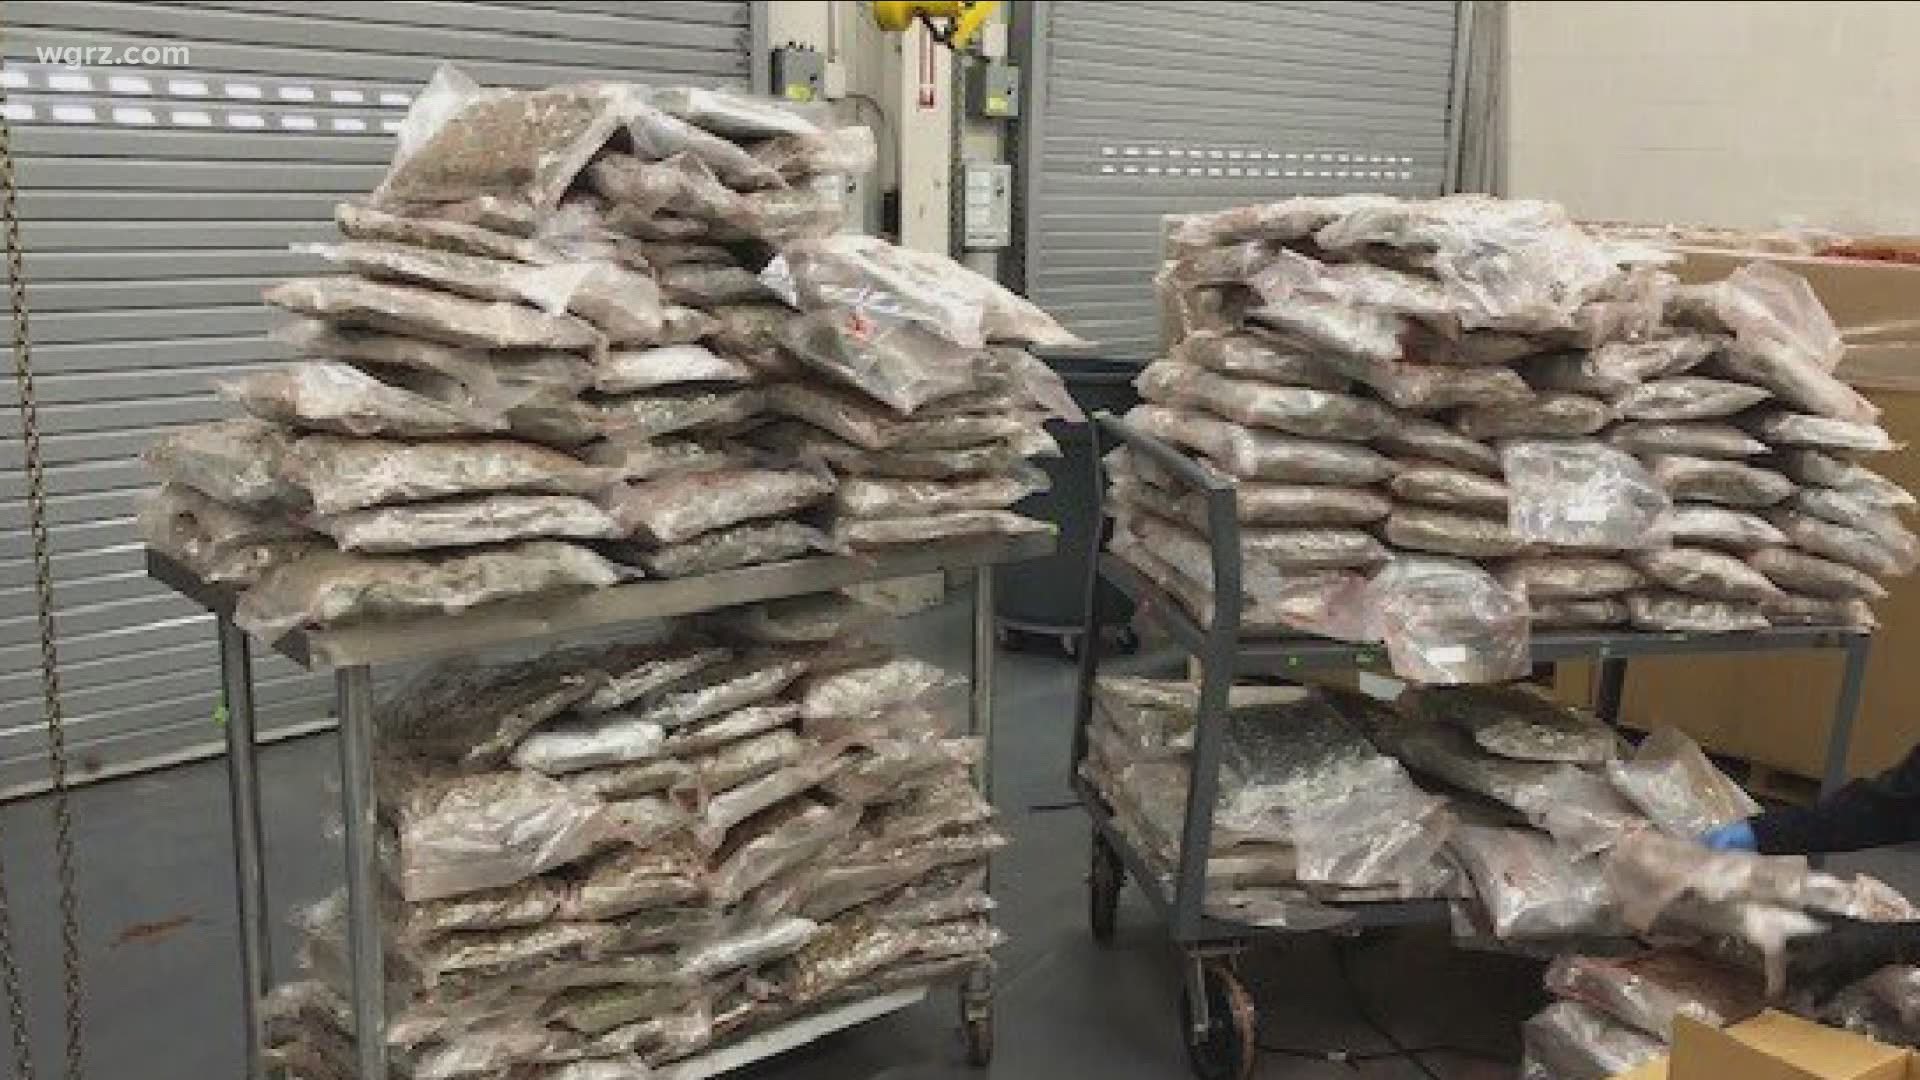 Seizures Of Large Shipments Of Marijuana At The Border On The Rise